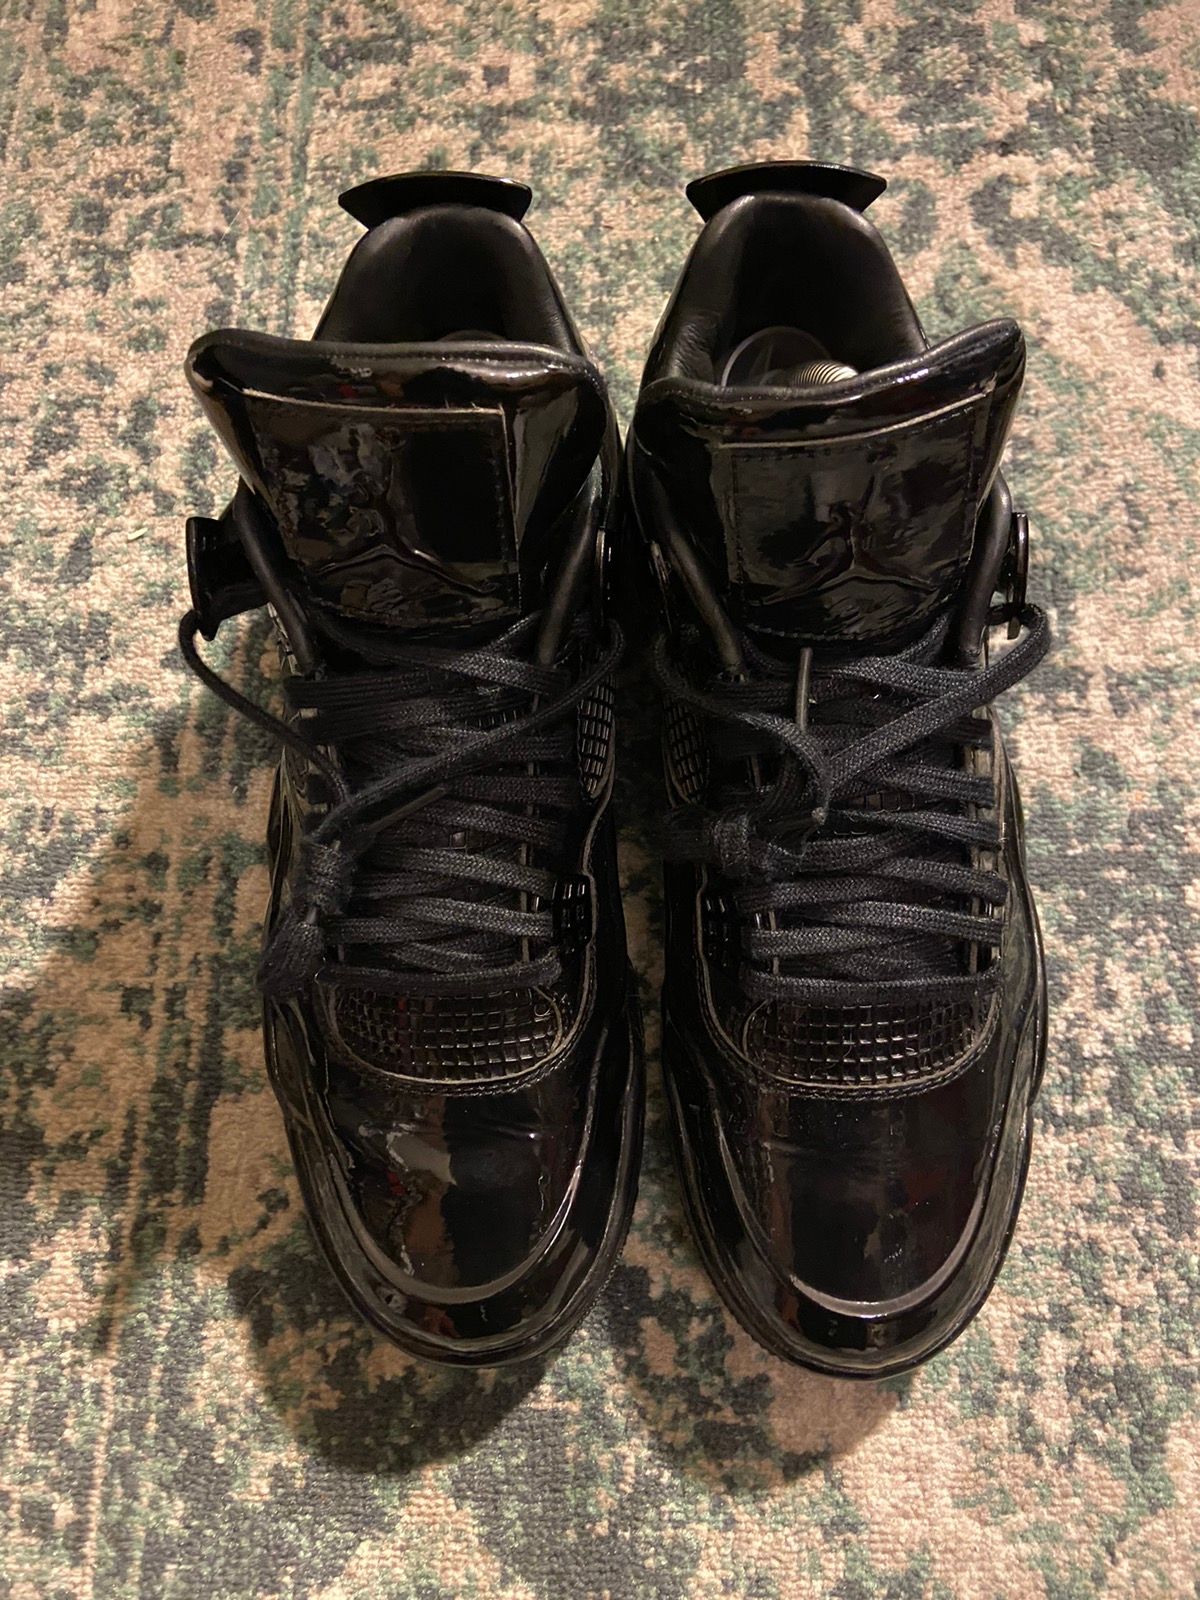 Pre-owned Jordan Nike Air Jordan 4 11lab4 Black Size 8.5 Used Shoes